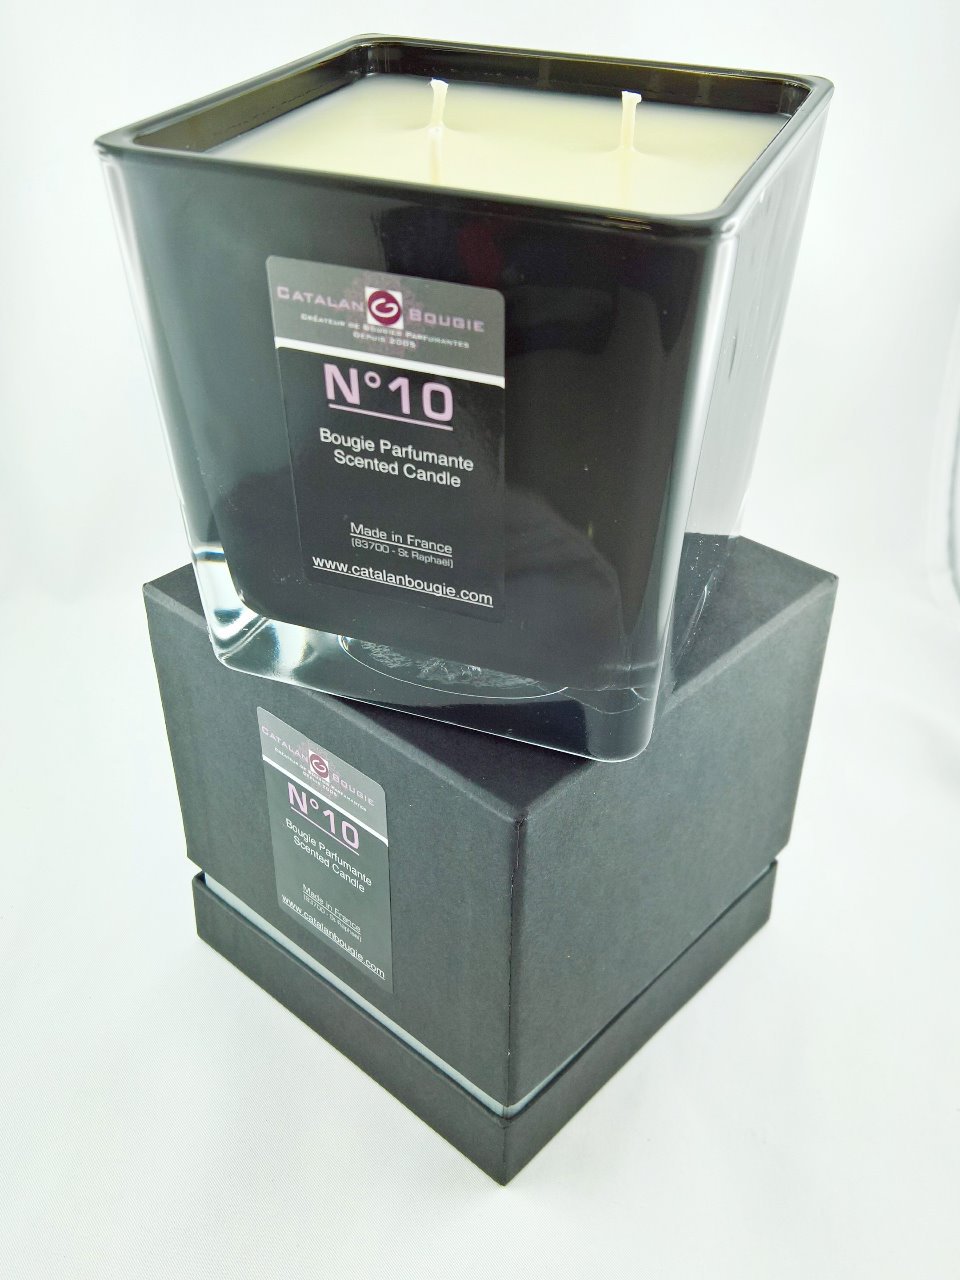 Bougie parfumée 'Verre Ricard anisette' 140 ml